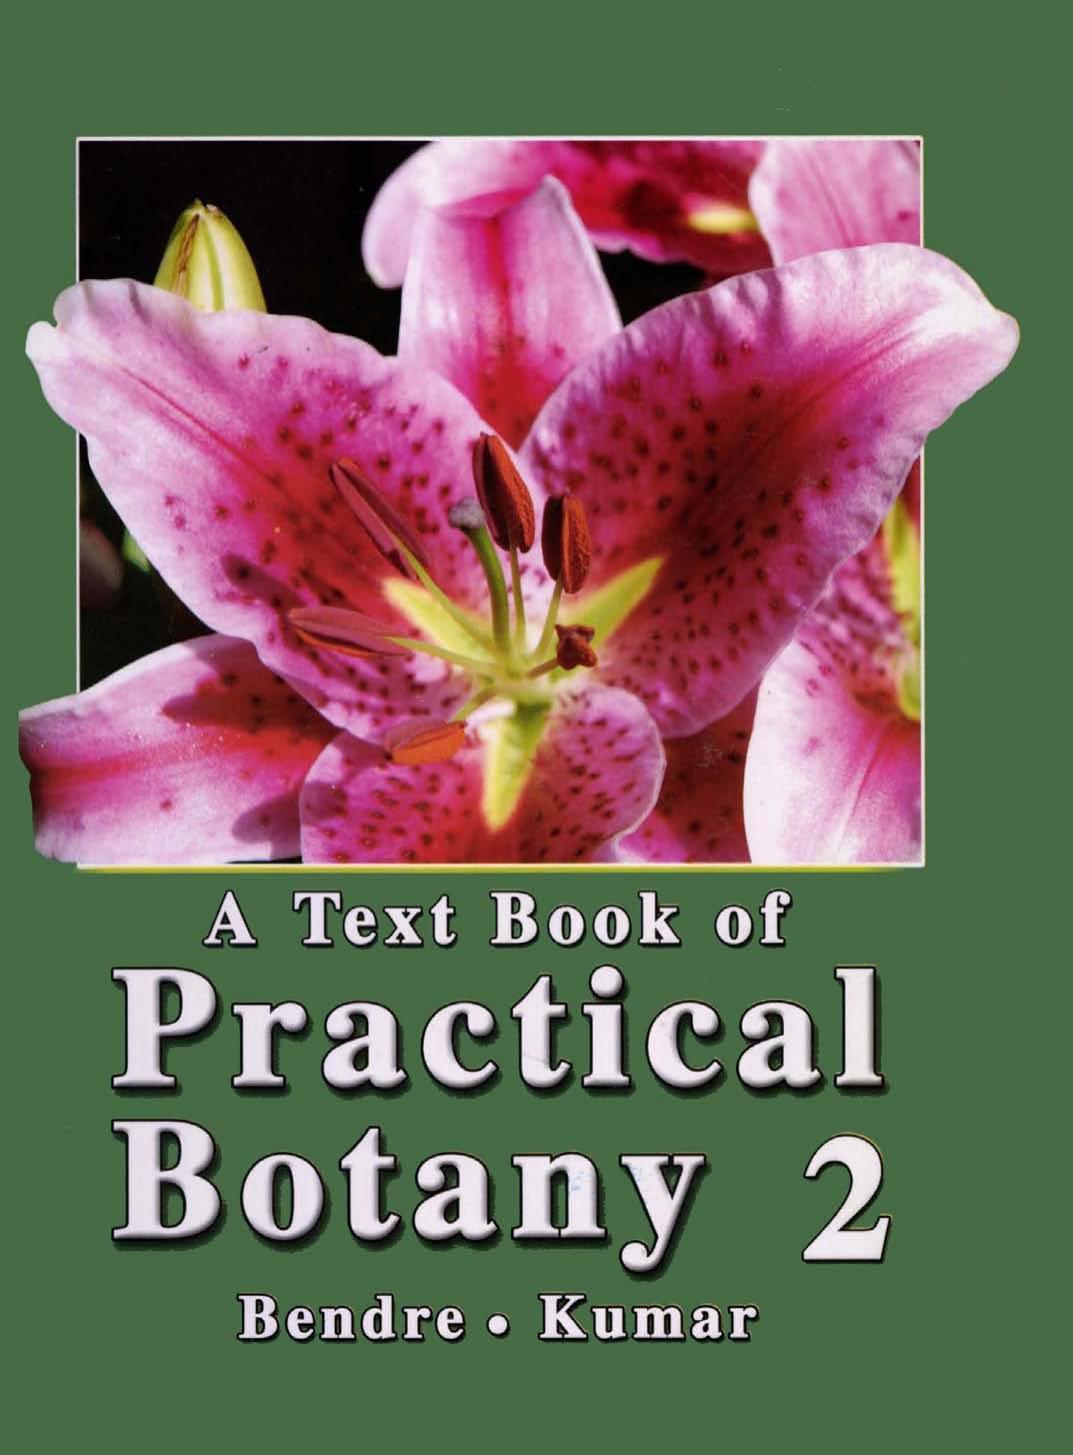 A Textbook of Practical Botany II